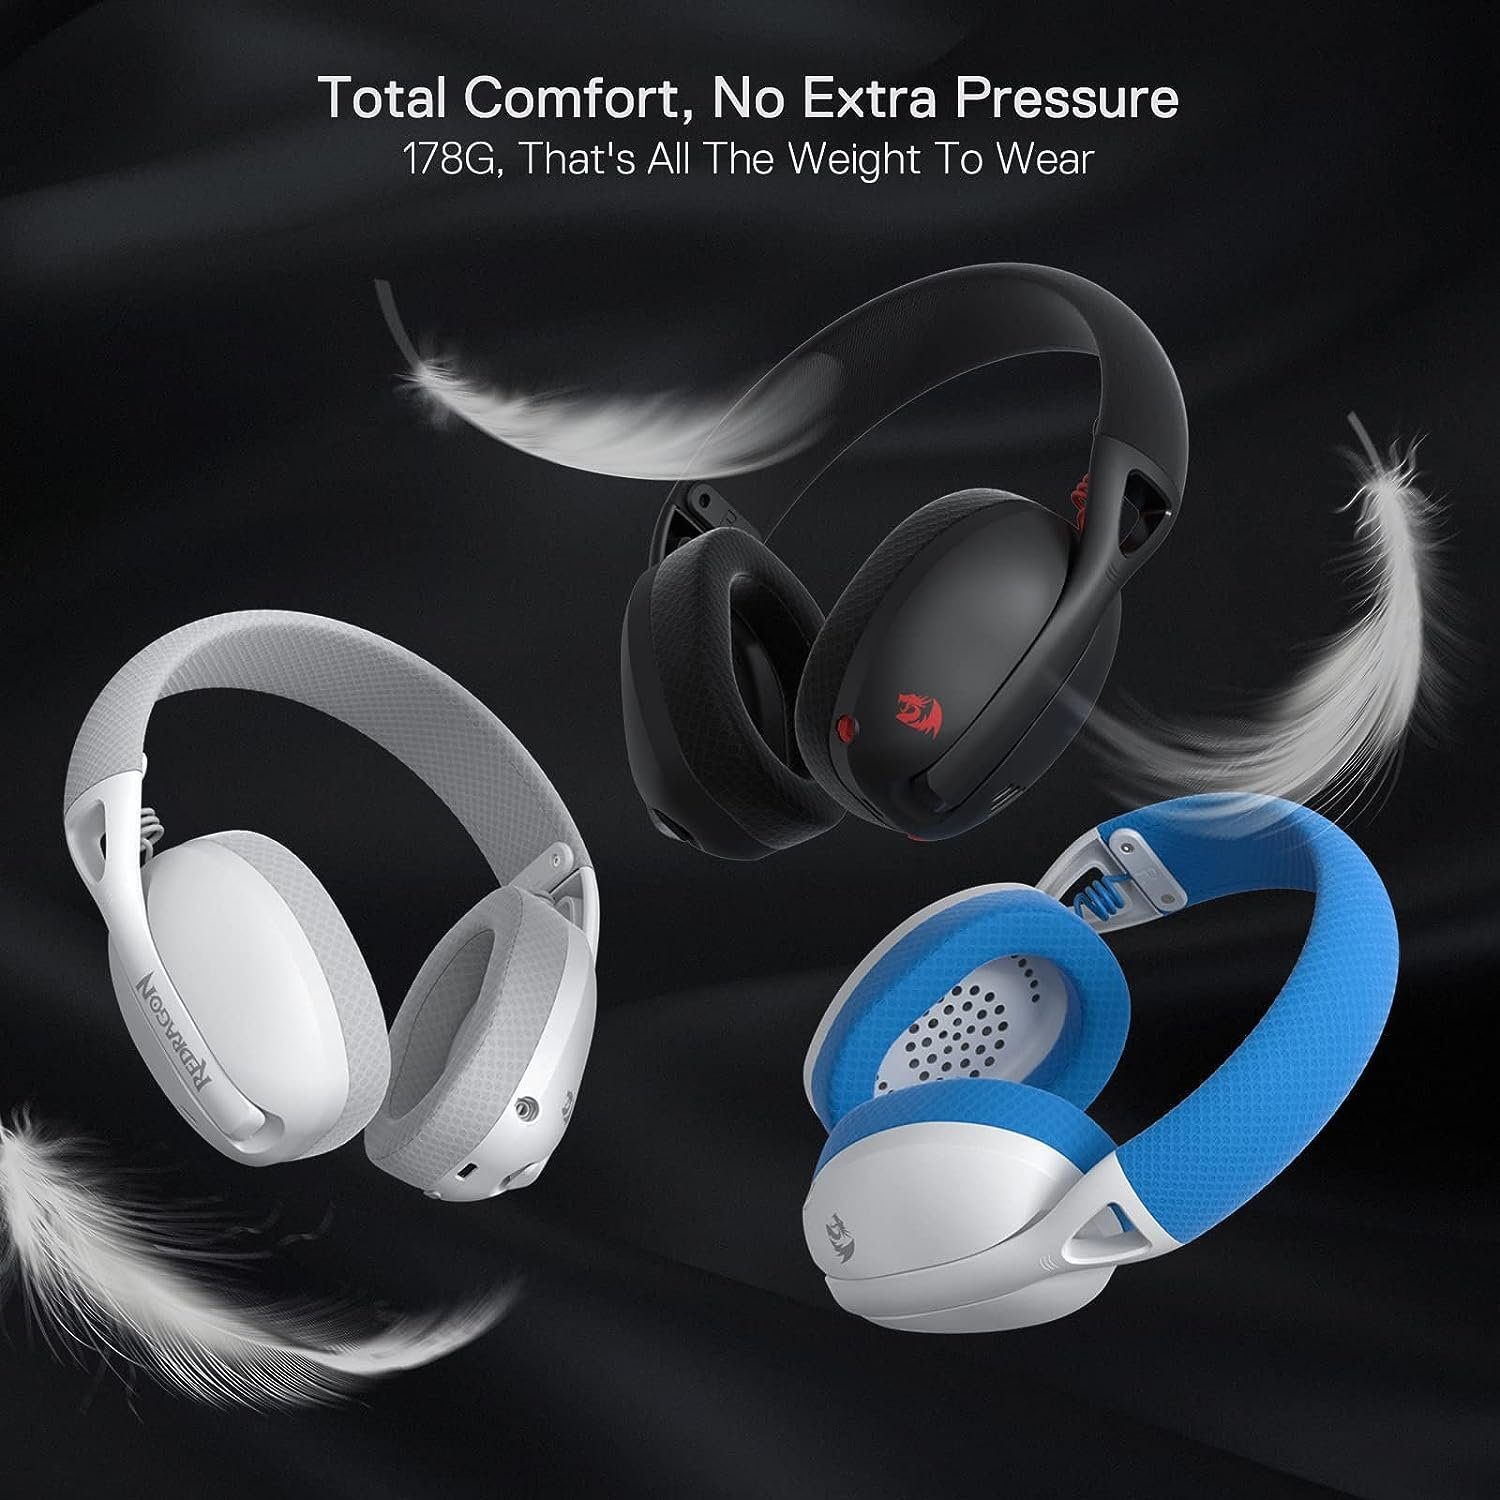 Drahtloses Sound, Gaming-Headset Gaming-Headset: H848 Multi-Plattform) 7.1 Treiber, 40 mm mit (Drahtloses Redragon Bluetooth-Gaming-Headset und LED-Beleuchtung., Rauschunterdrückung